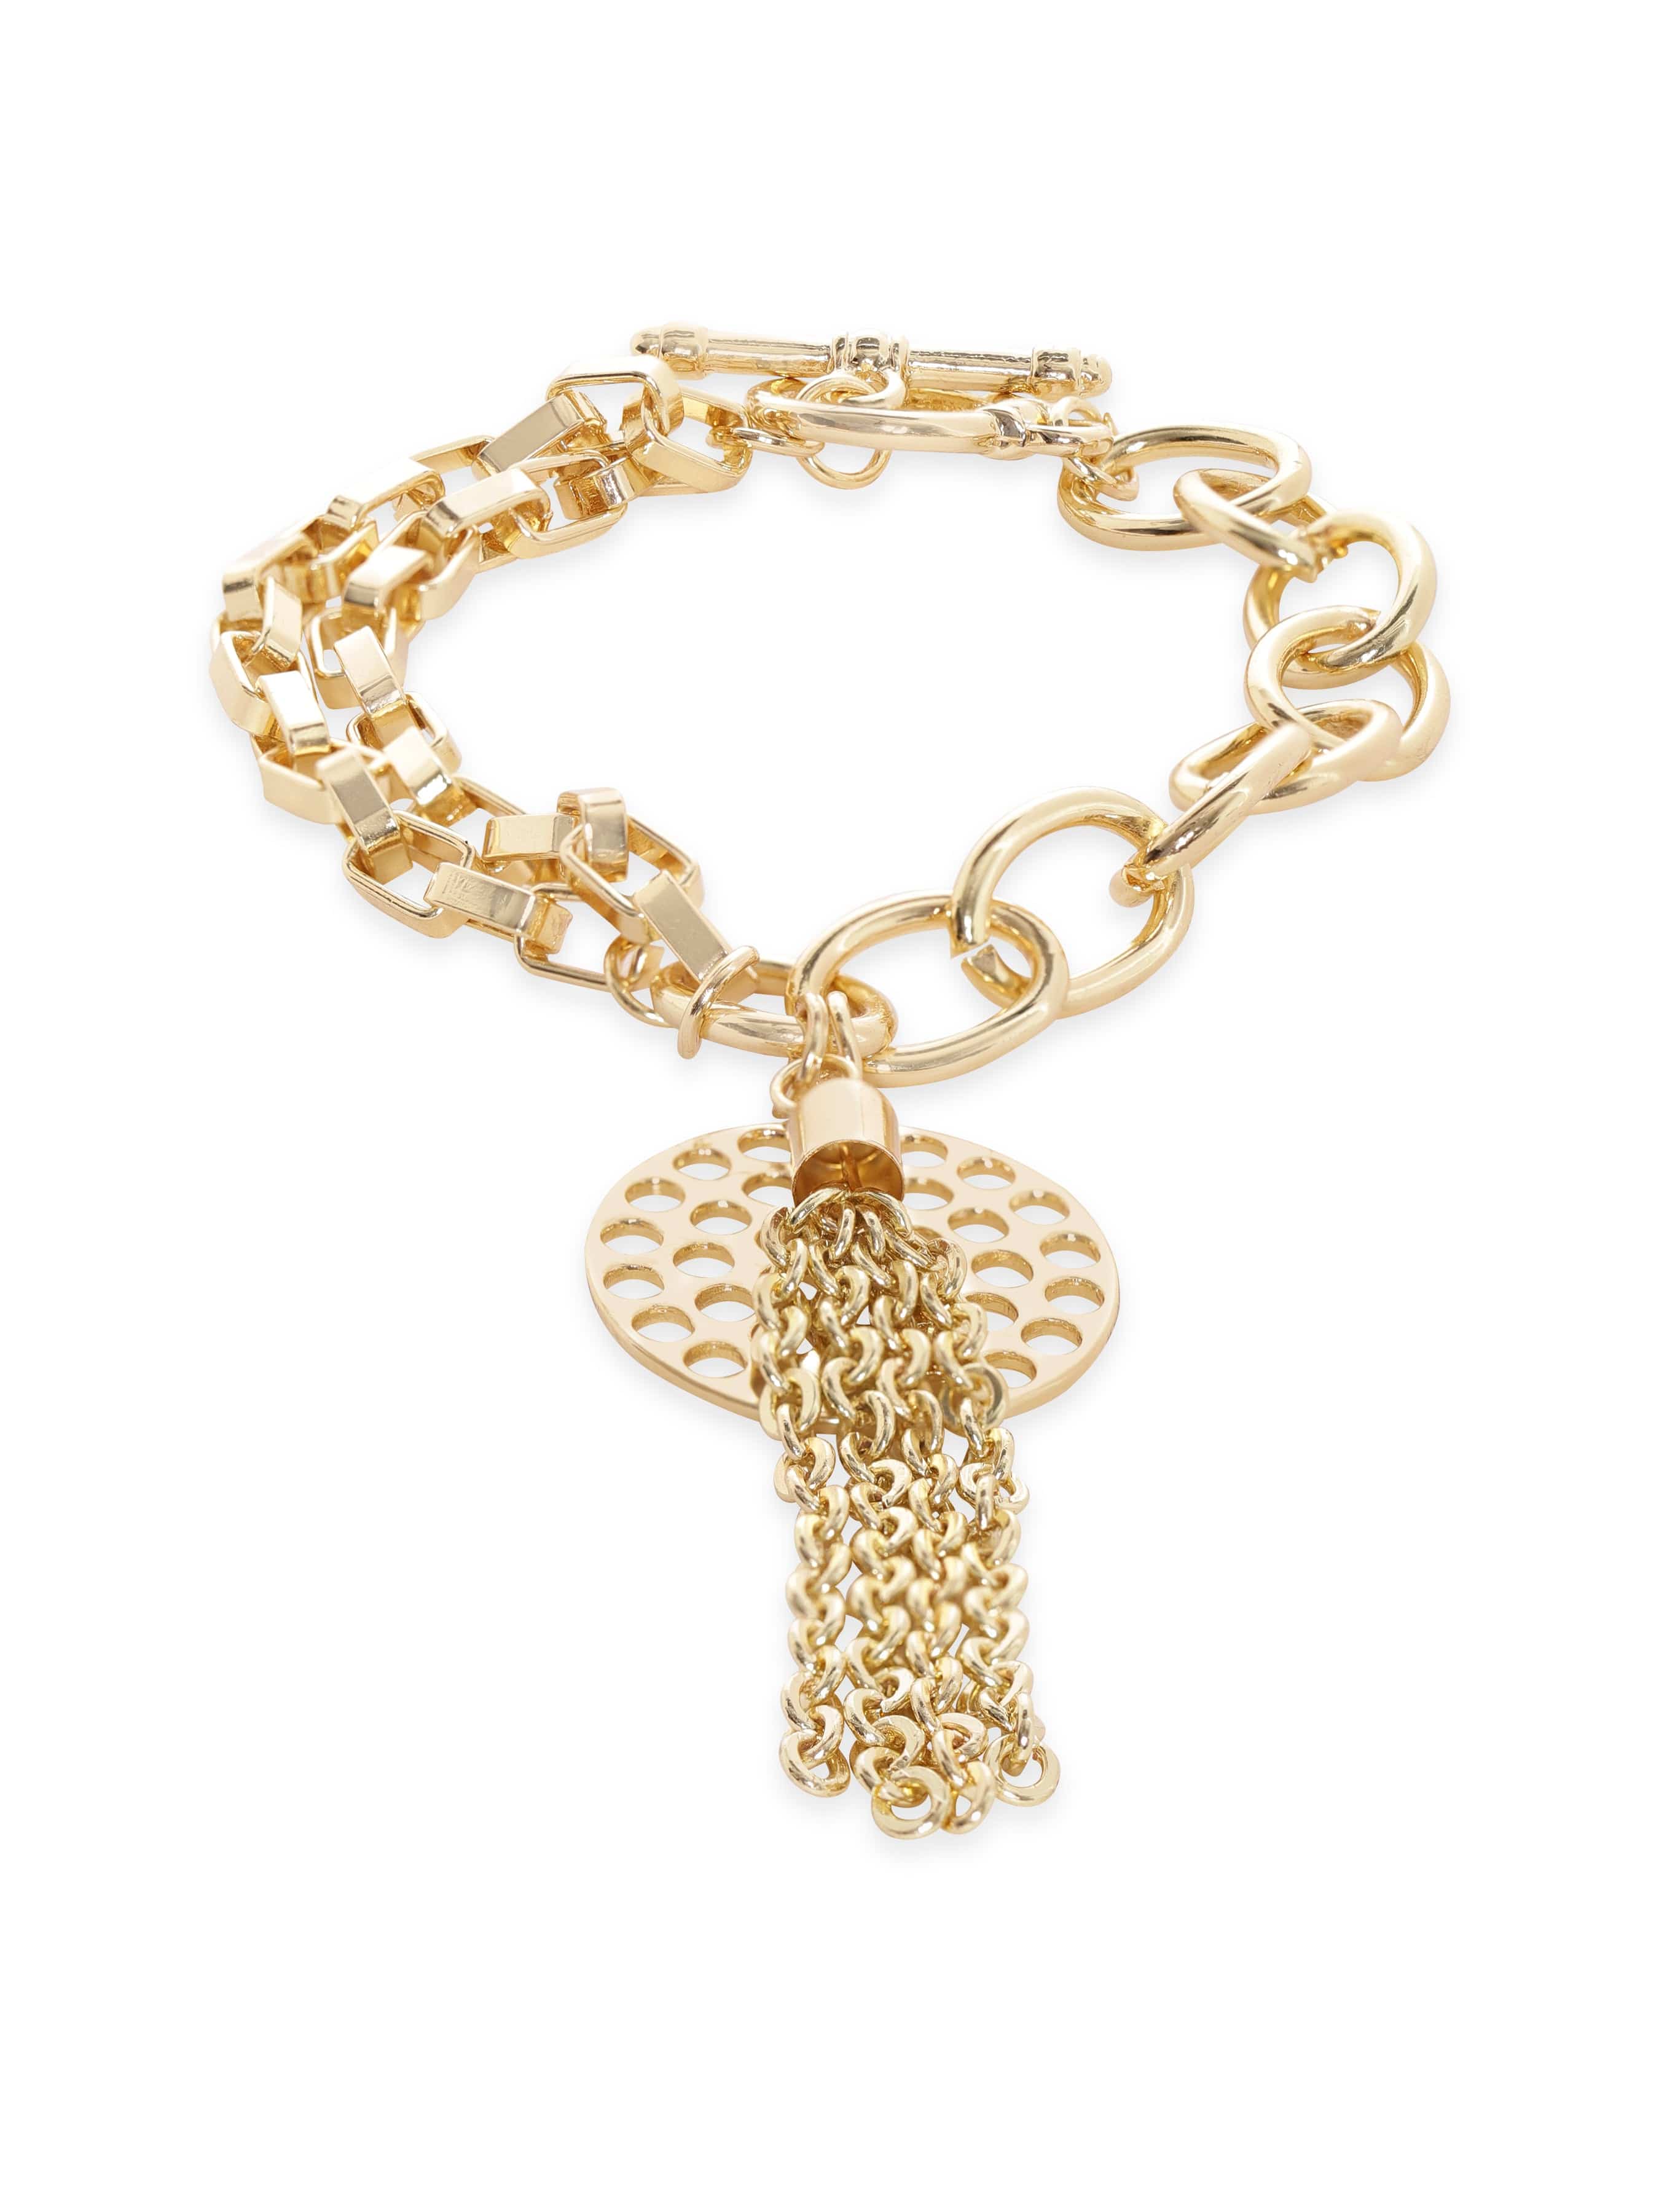 Sehgal Gold 22K Charm Gold Bracelet For Women | SEHGAL GOLD ORNAMENTS PVT.  LTD.